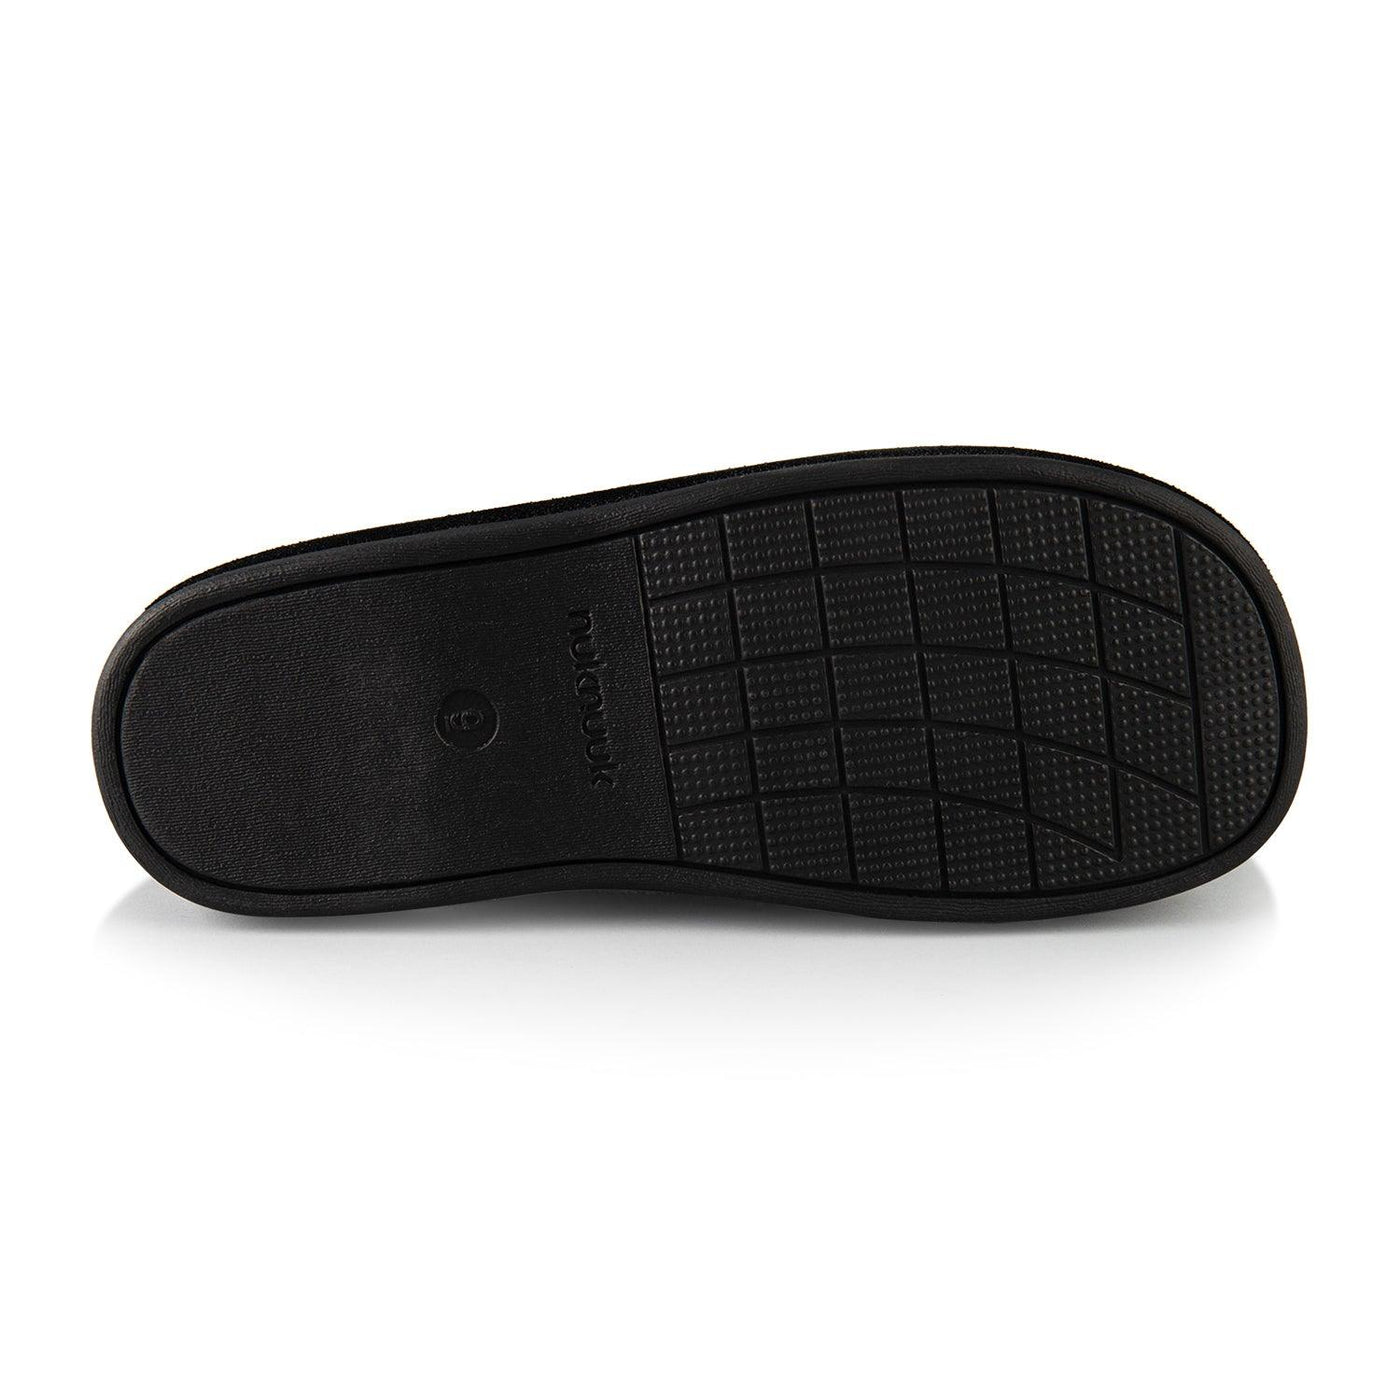 Todd men's slipper (Black) - Nuknuuk